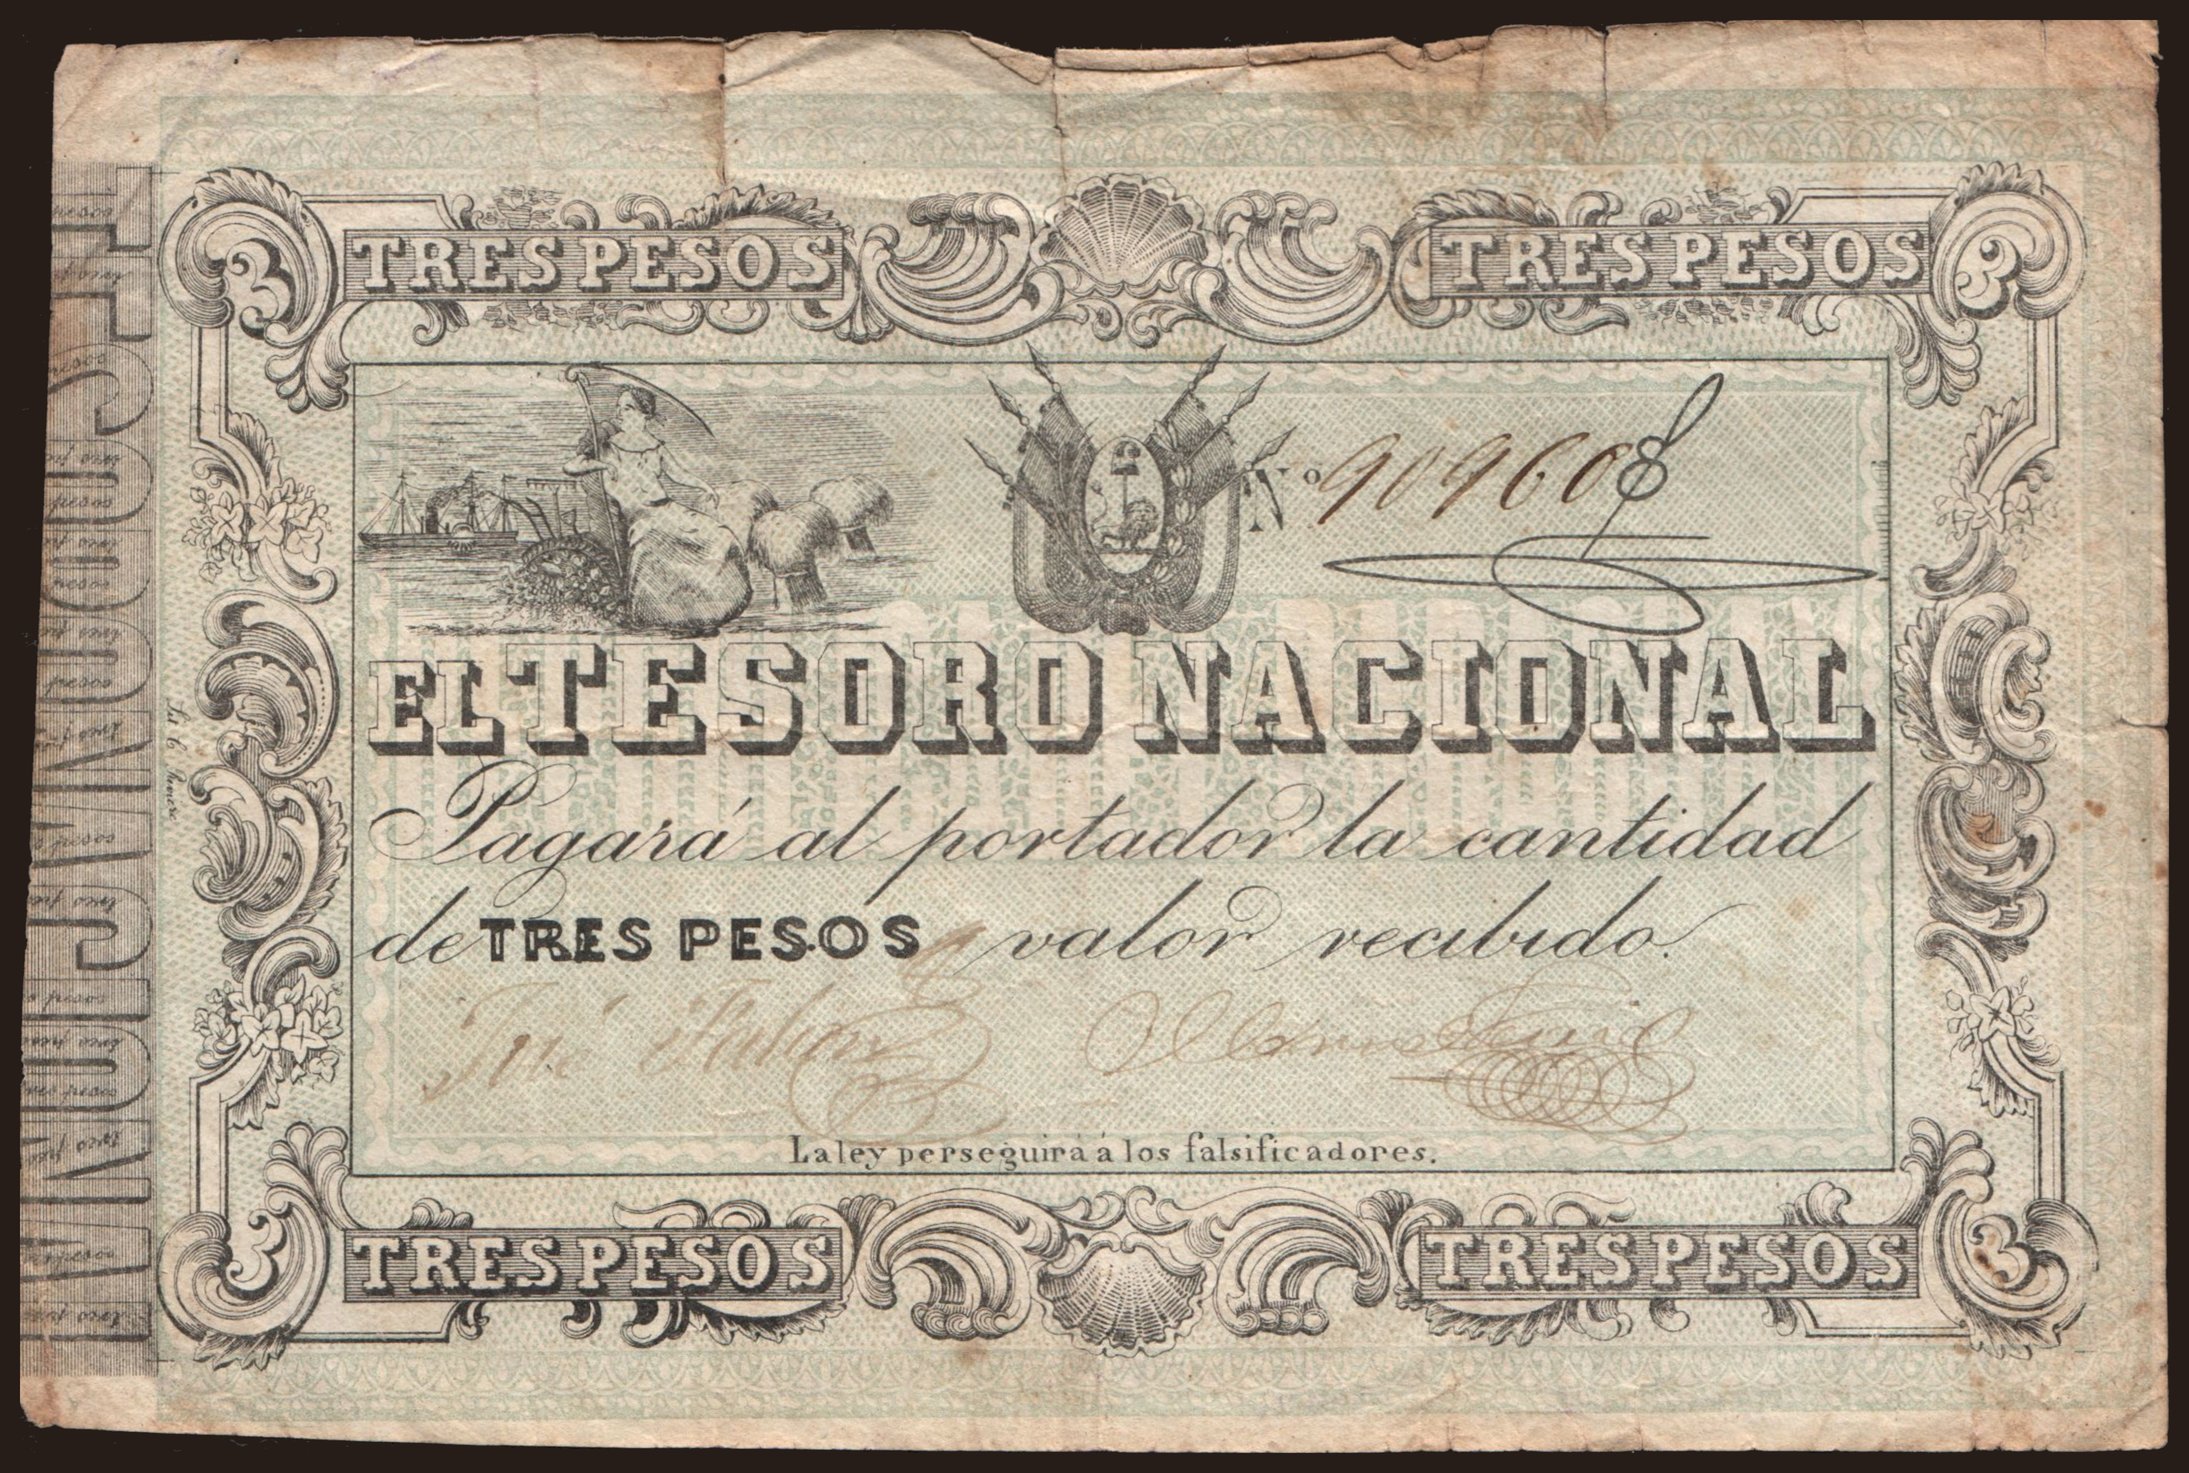 3 pesos, 1860